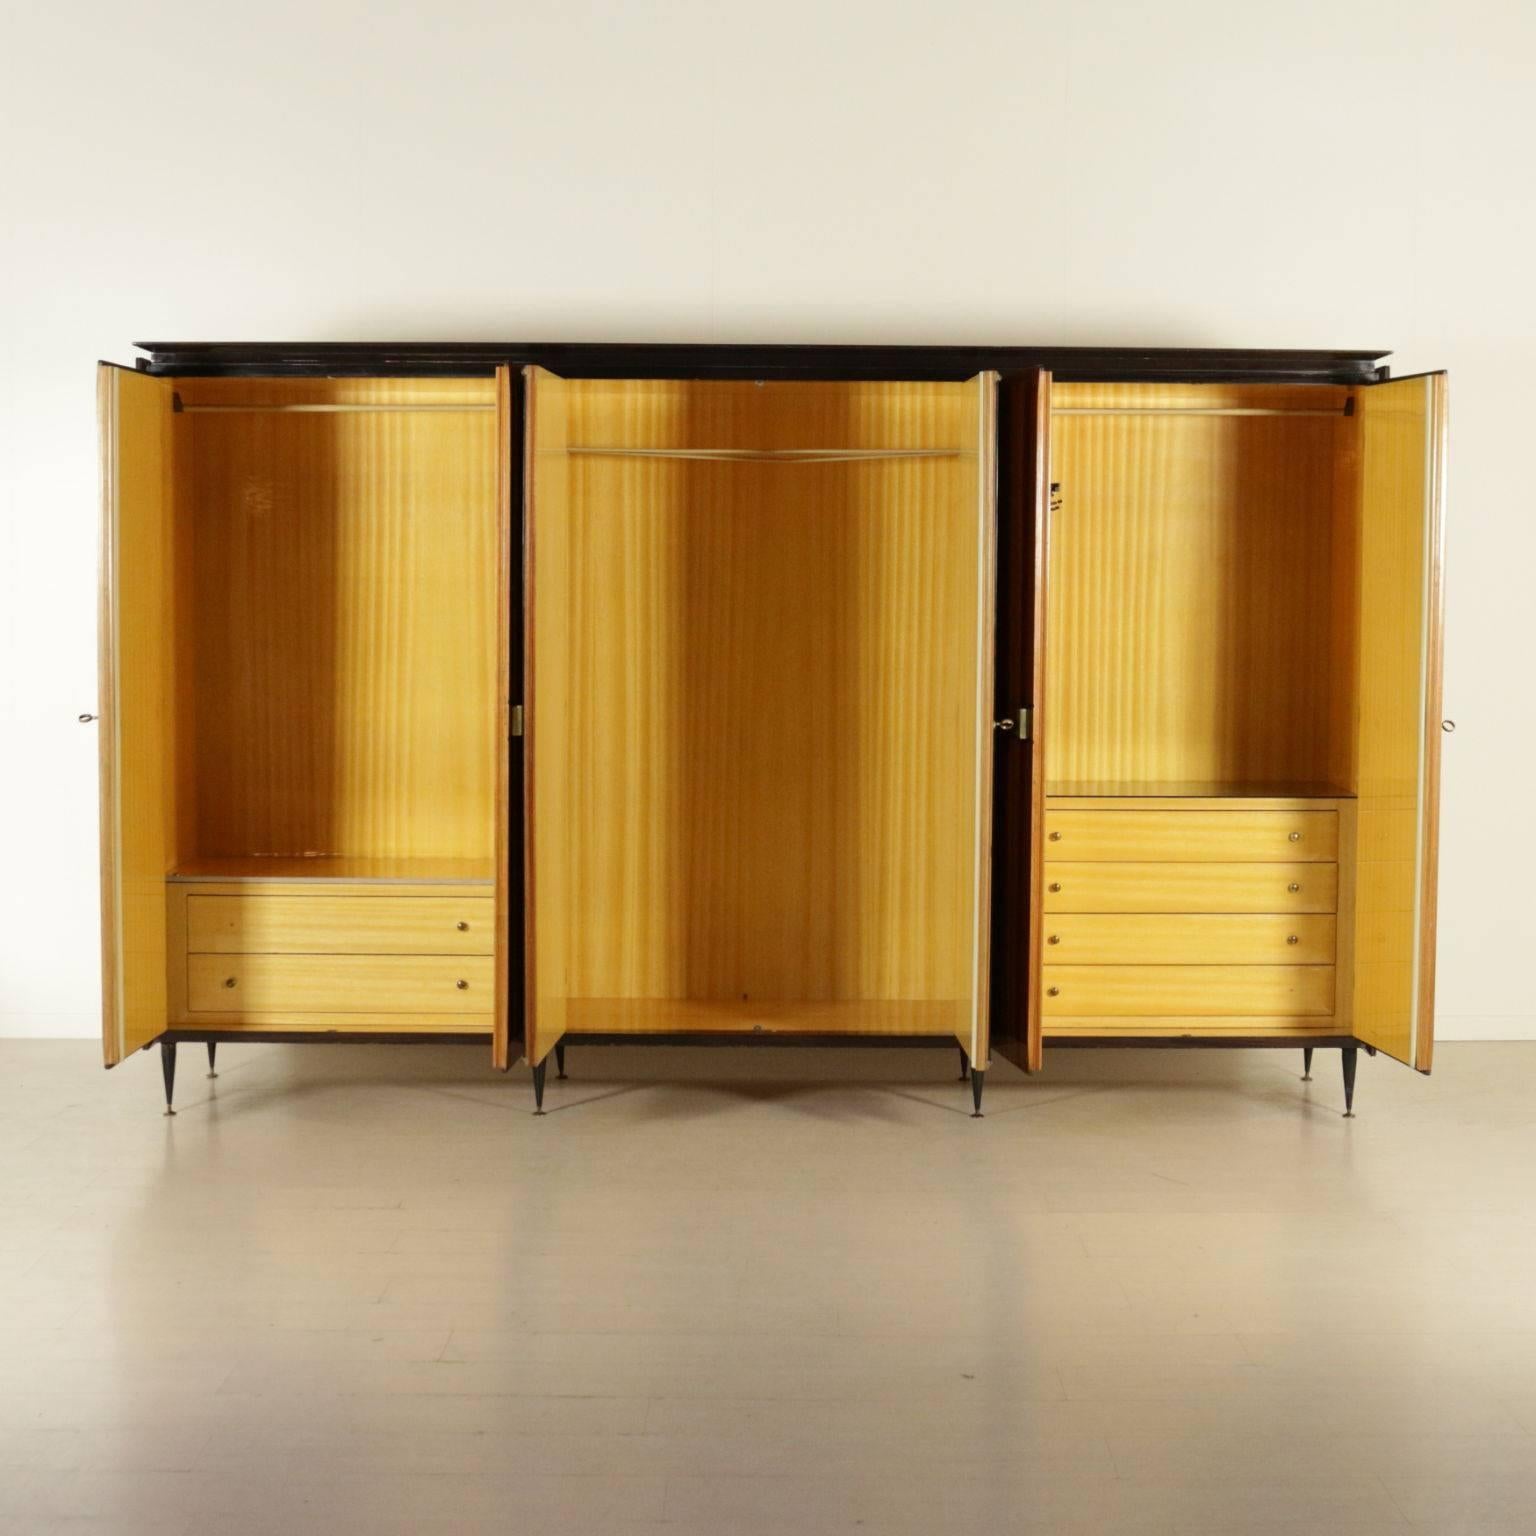 A wardrobe with six hinged doors, rosewood veneer, mirrors, brass handles, metal legs. Manufactured in Italy, 1950s-1960s.